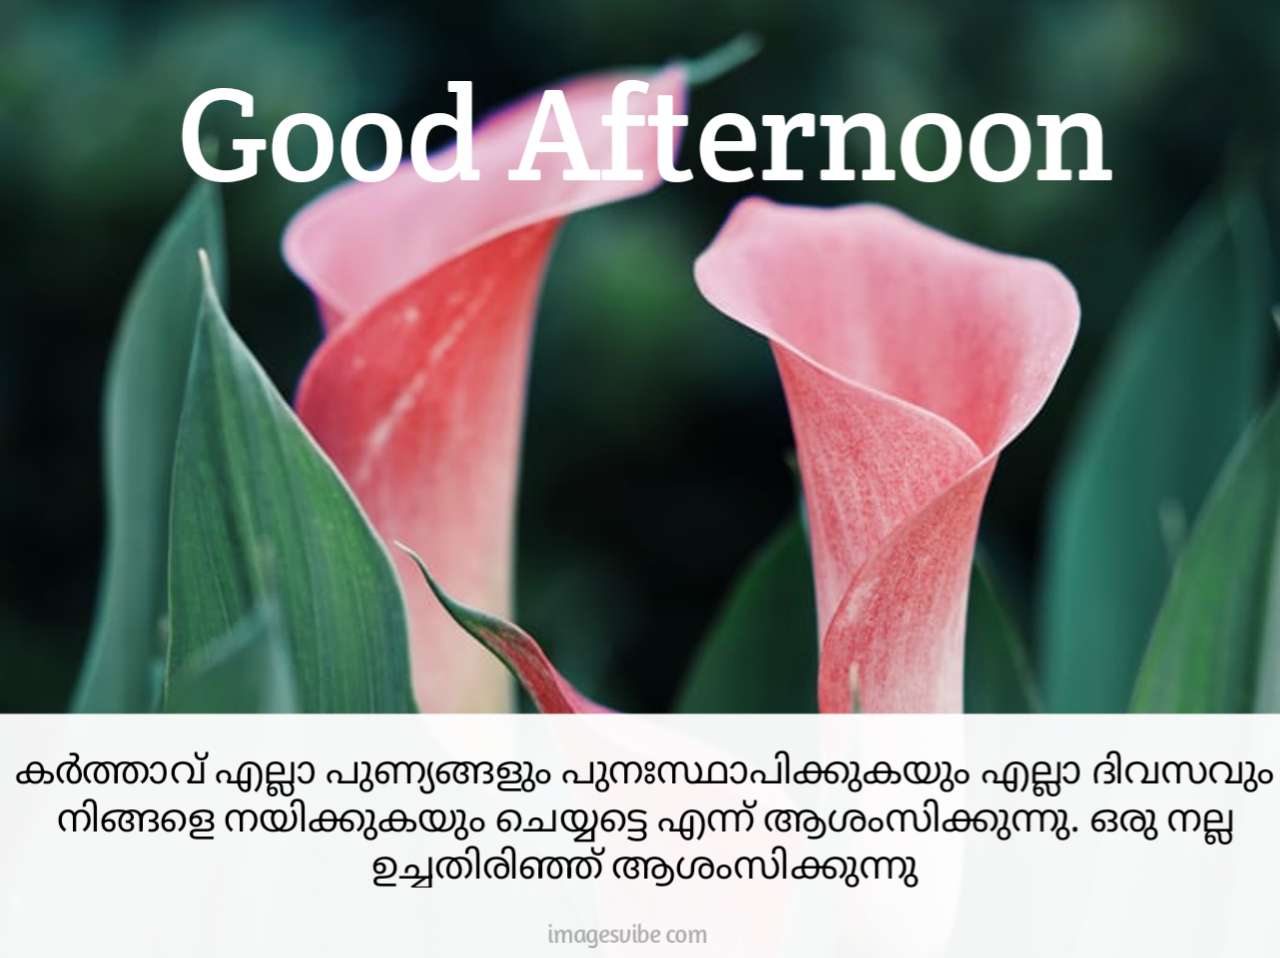 Good Afternoon Malayalam Images